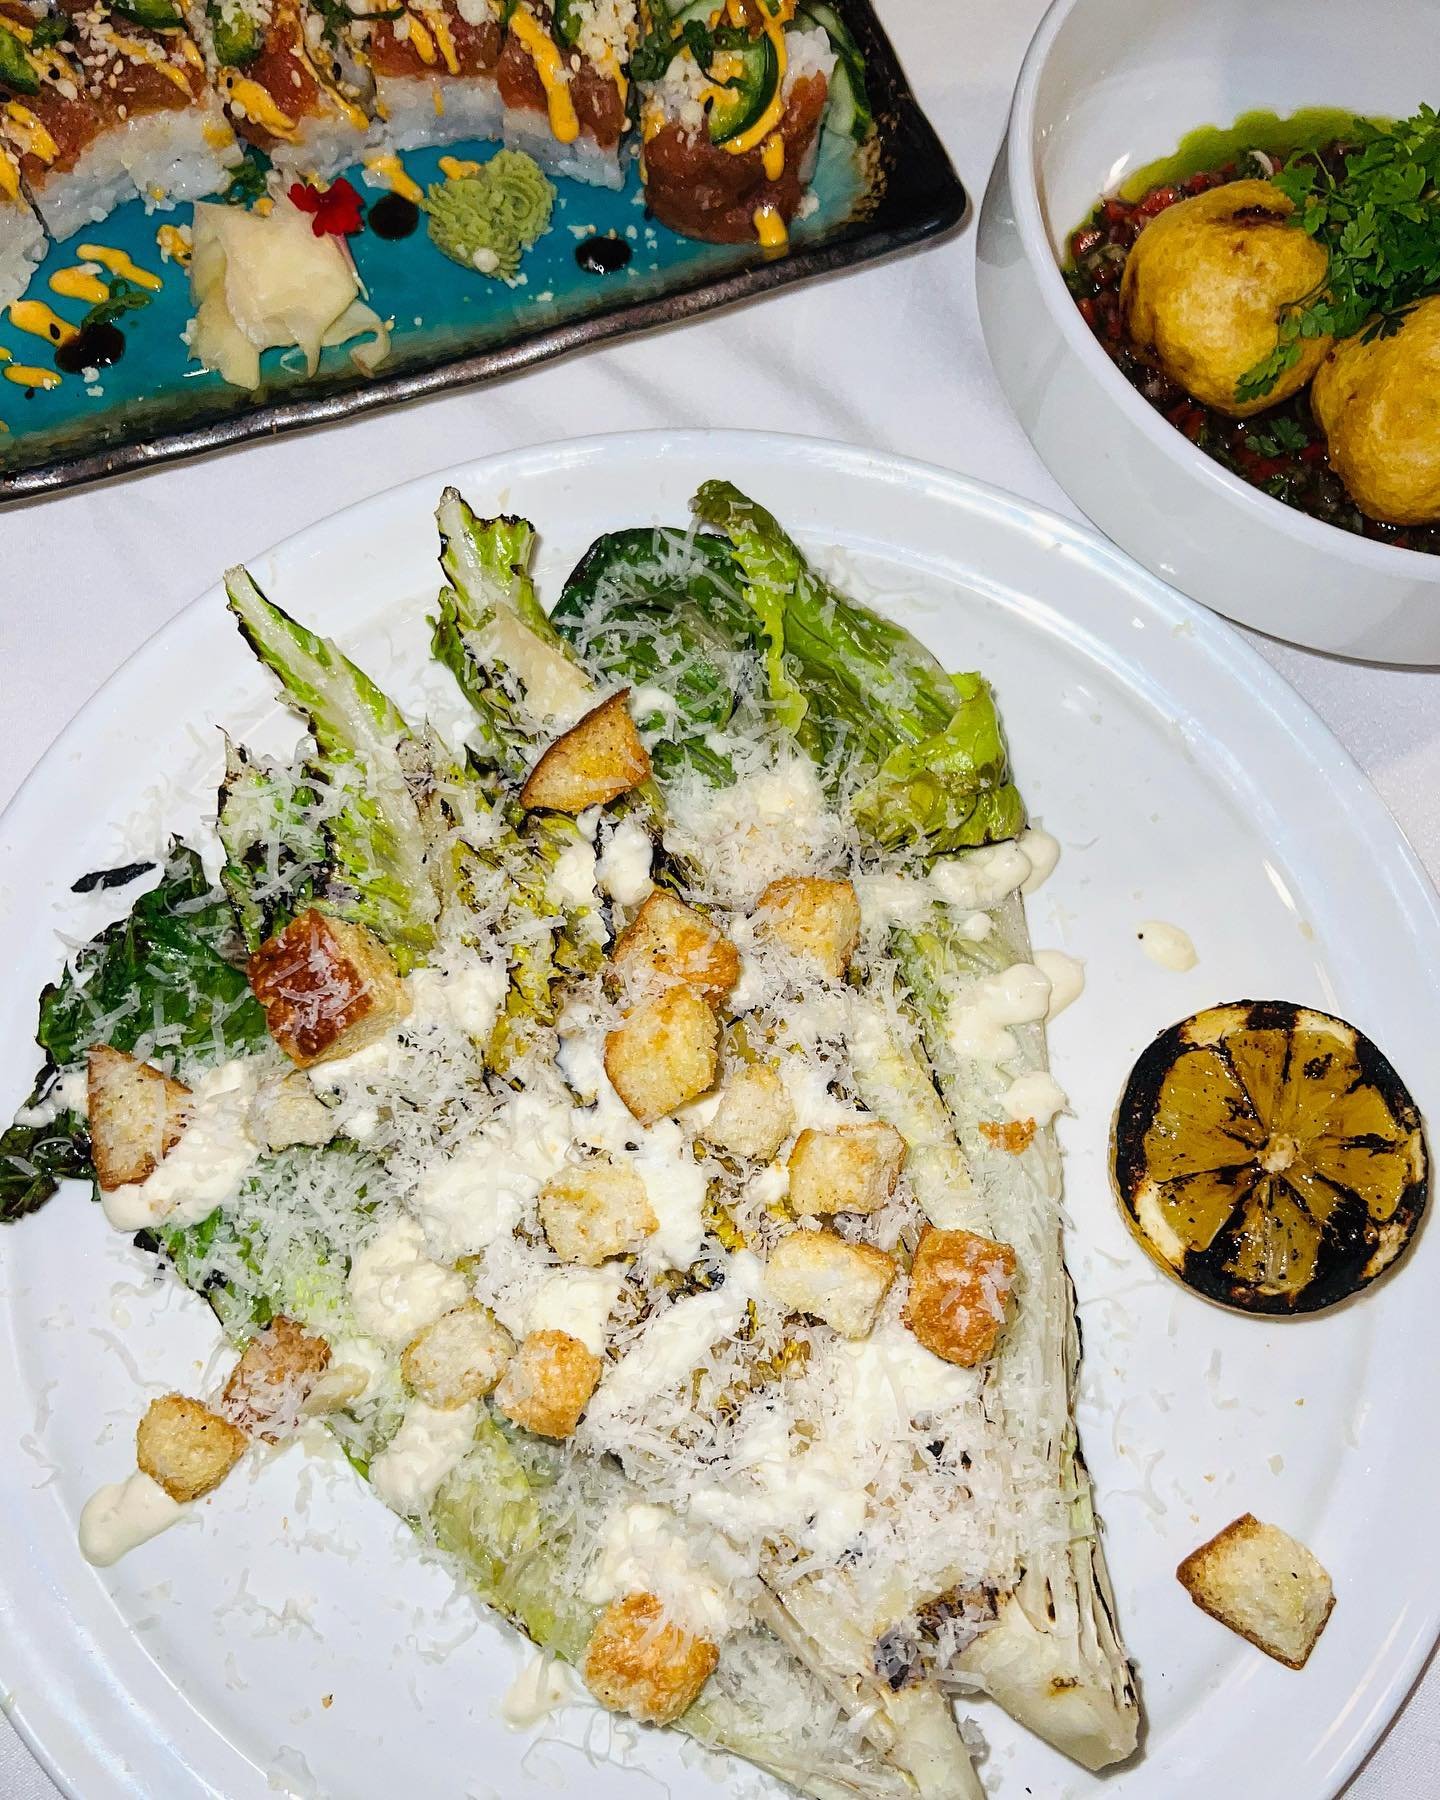 Not your average caesar salad 🥗 

📸 @phat_phucks 

#thepompano #sono #southnorwalk #norwalkconnecticut #ctbites #heystamford #norwalkct #caesar #salad #greens #ugc #fresh #dressing #bestofwhatsaround #203local #yum #foodiegram #bestbites